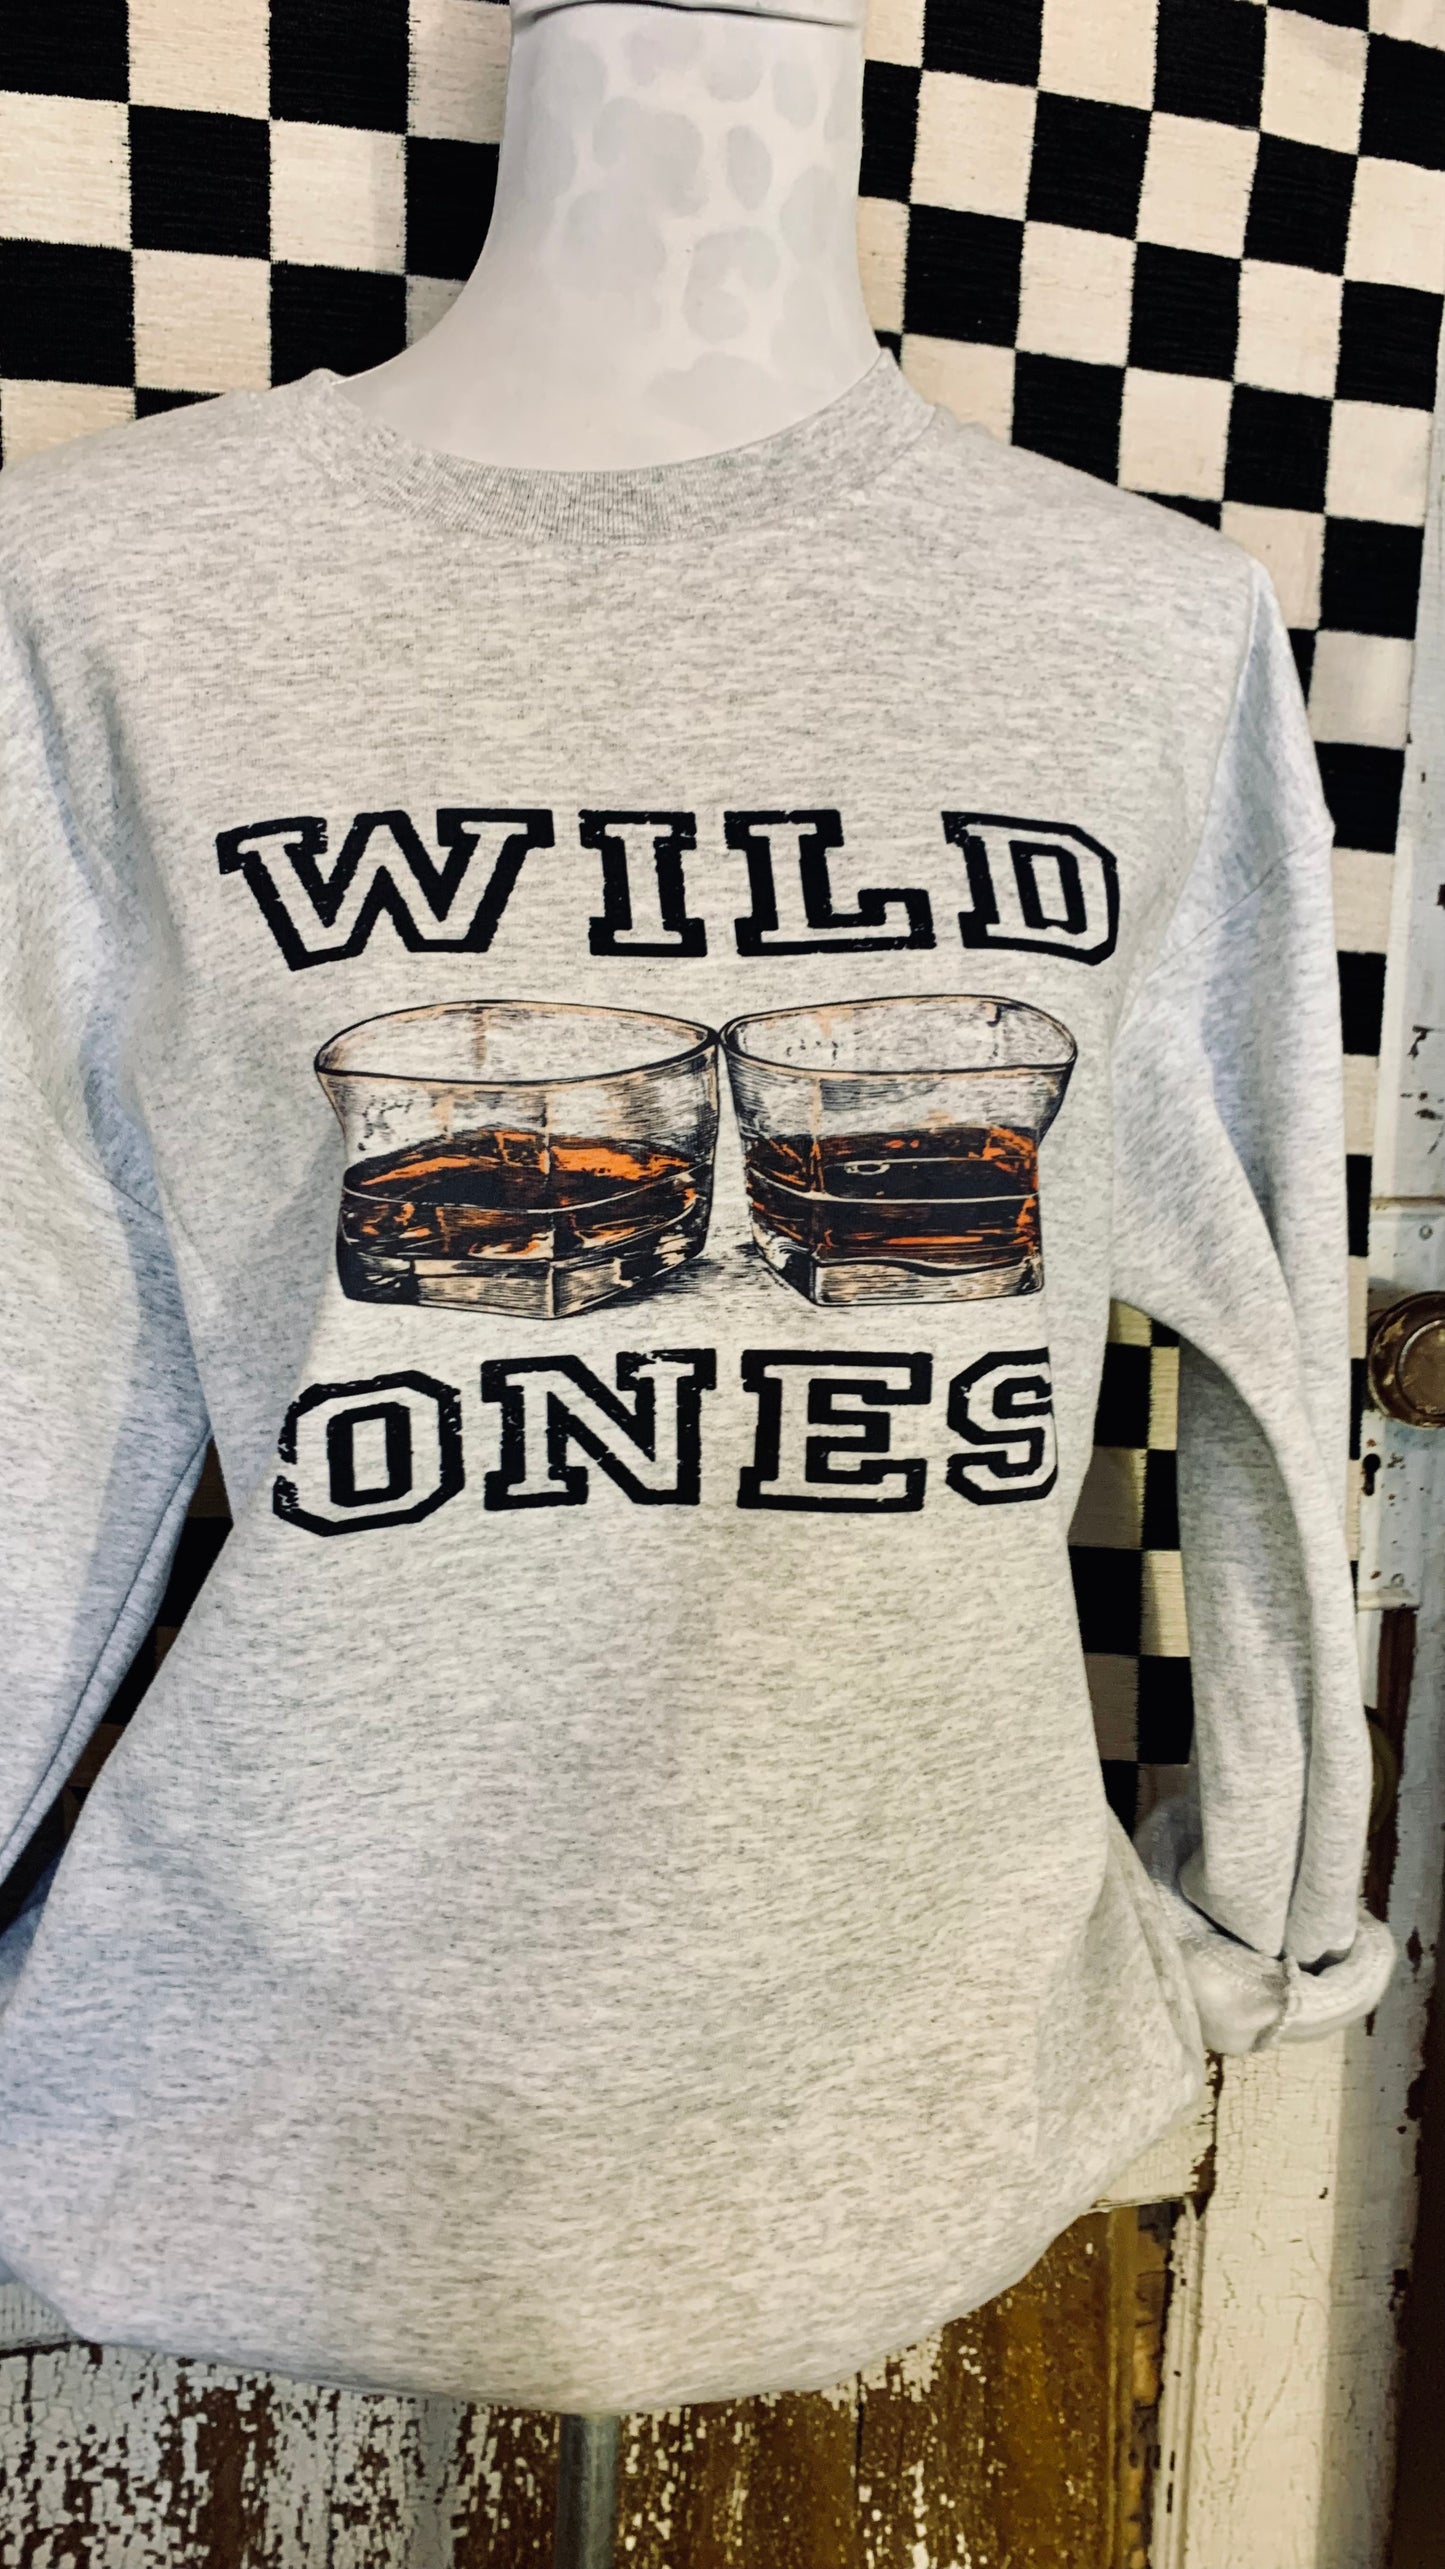 Wild ones